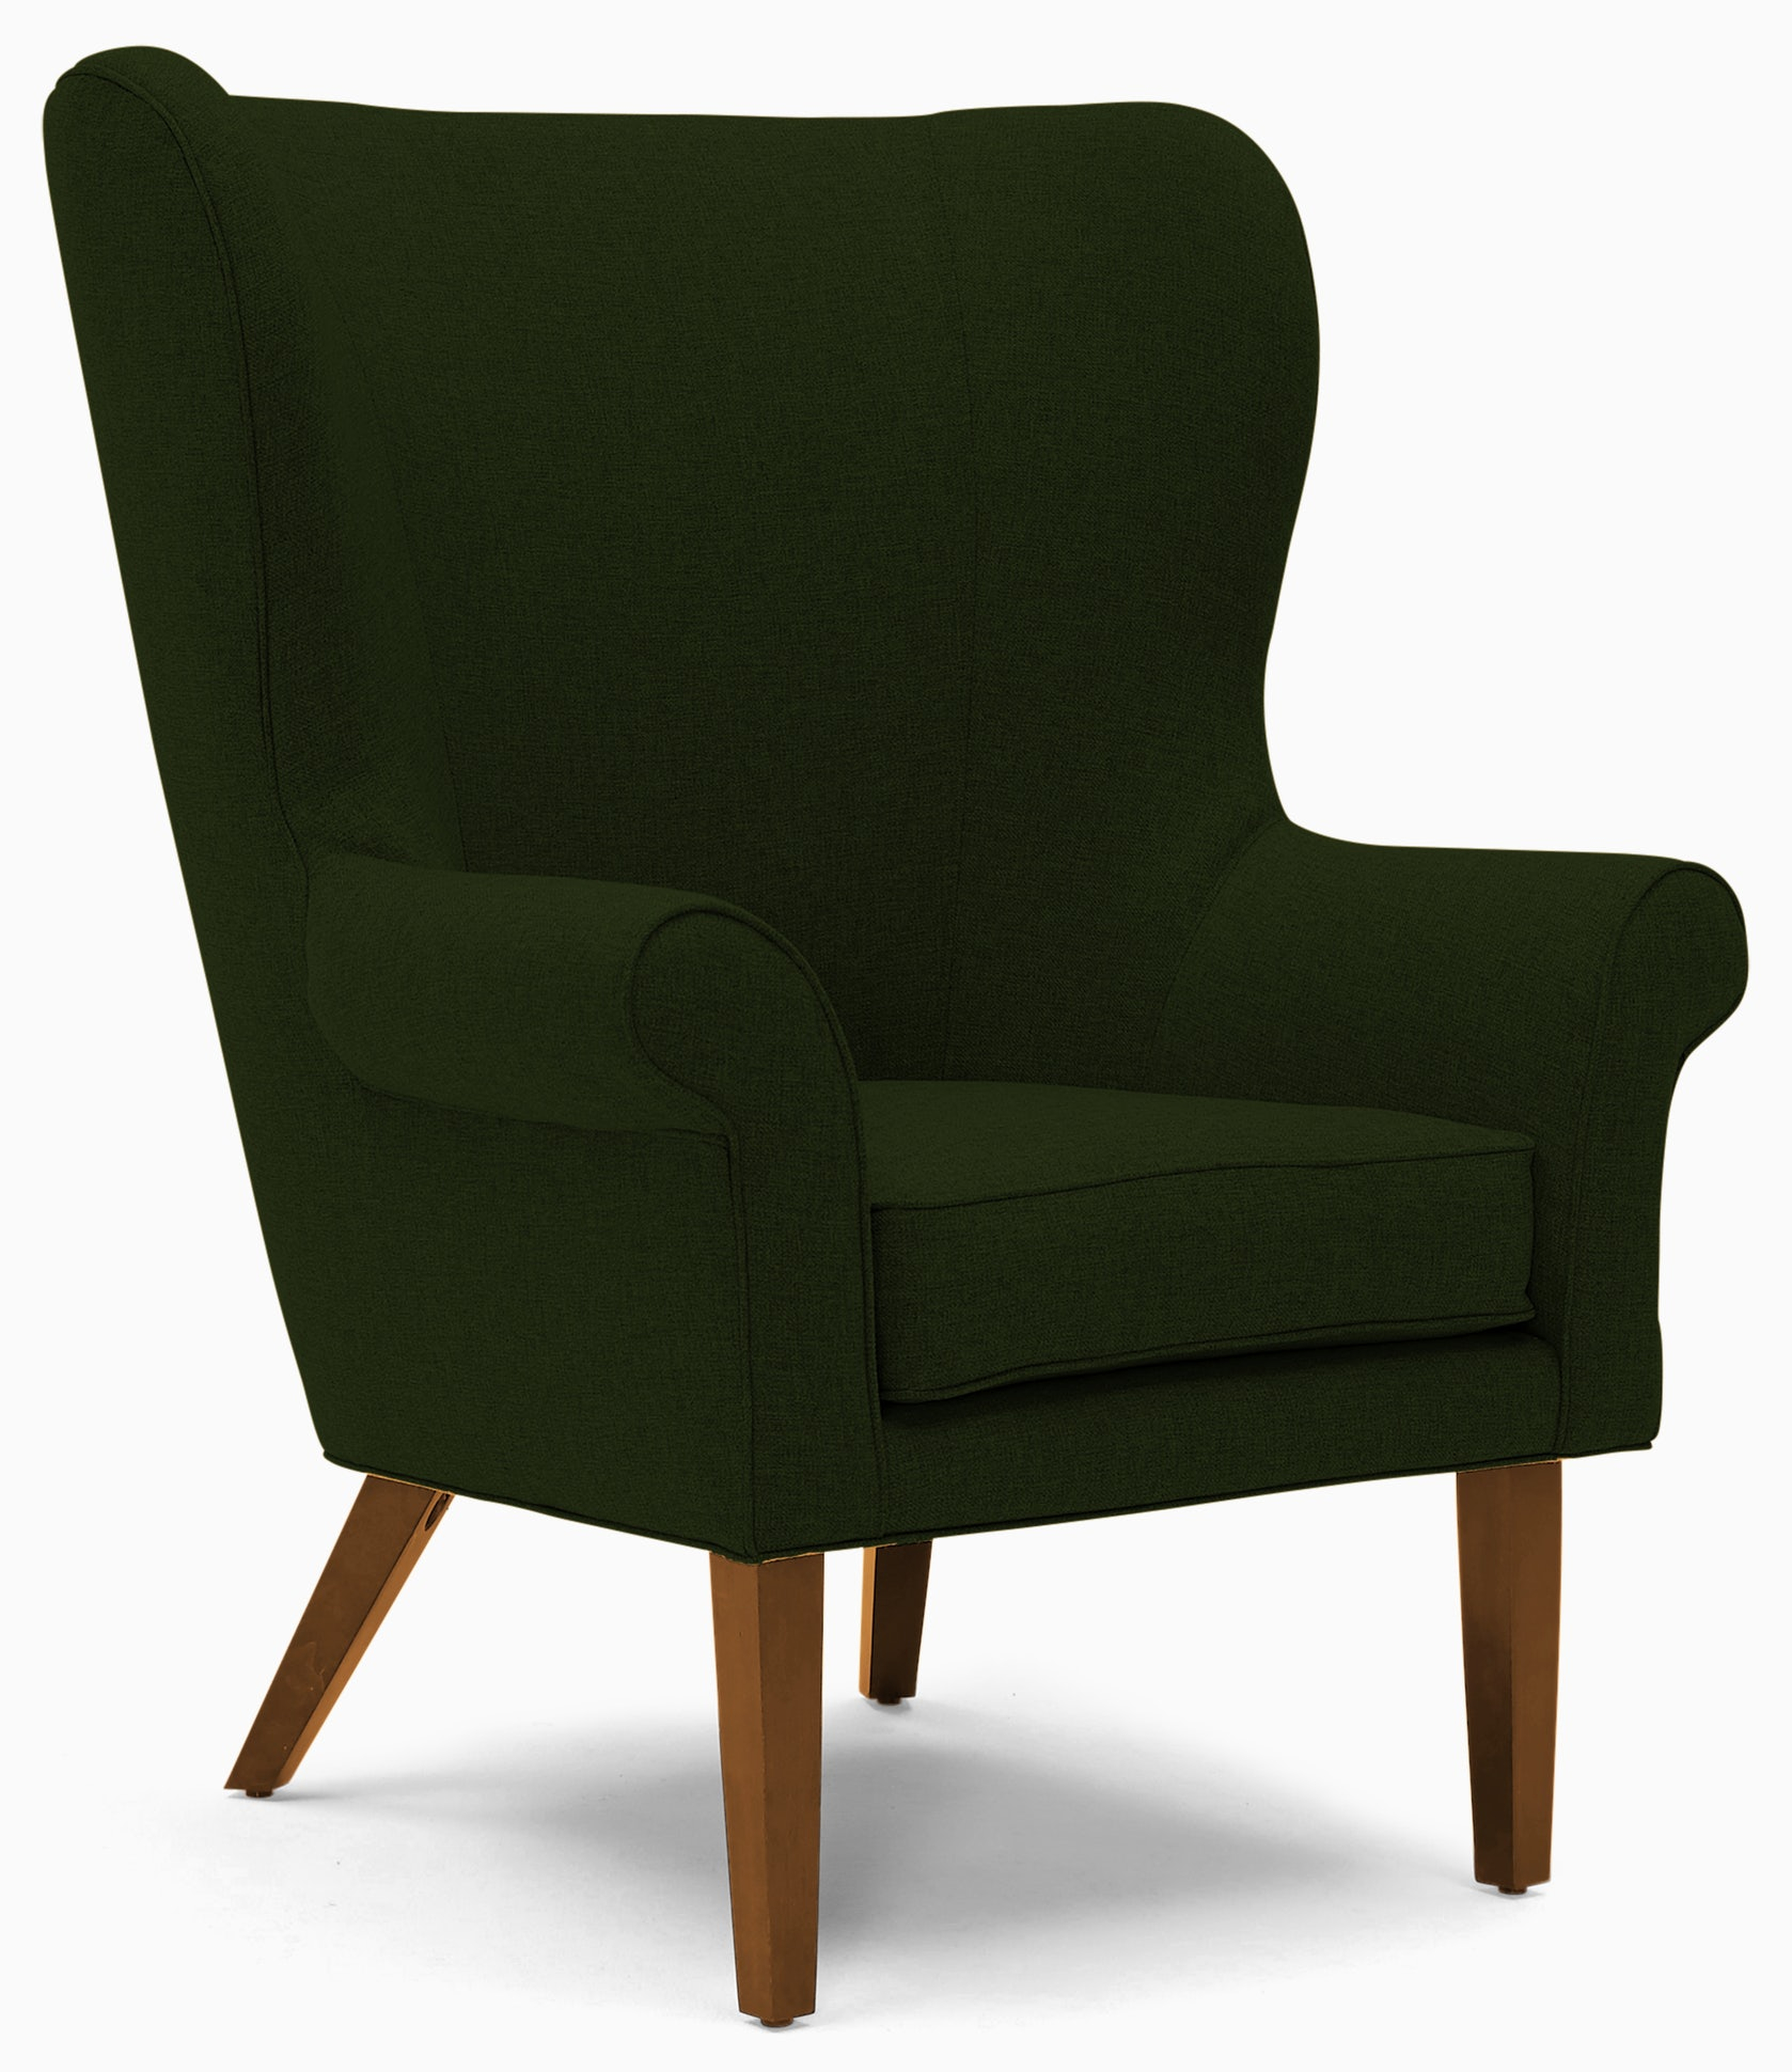 Ellsworth Mid Century Modern Wing Chair - Royale Forest - Mocha - Joybird